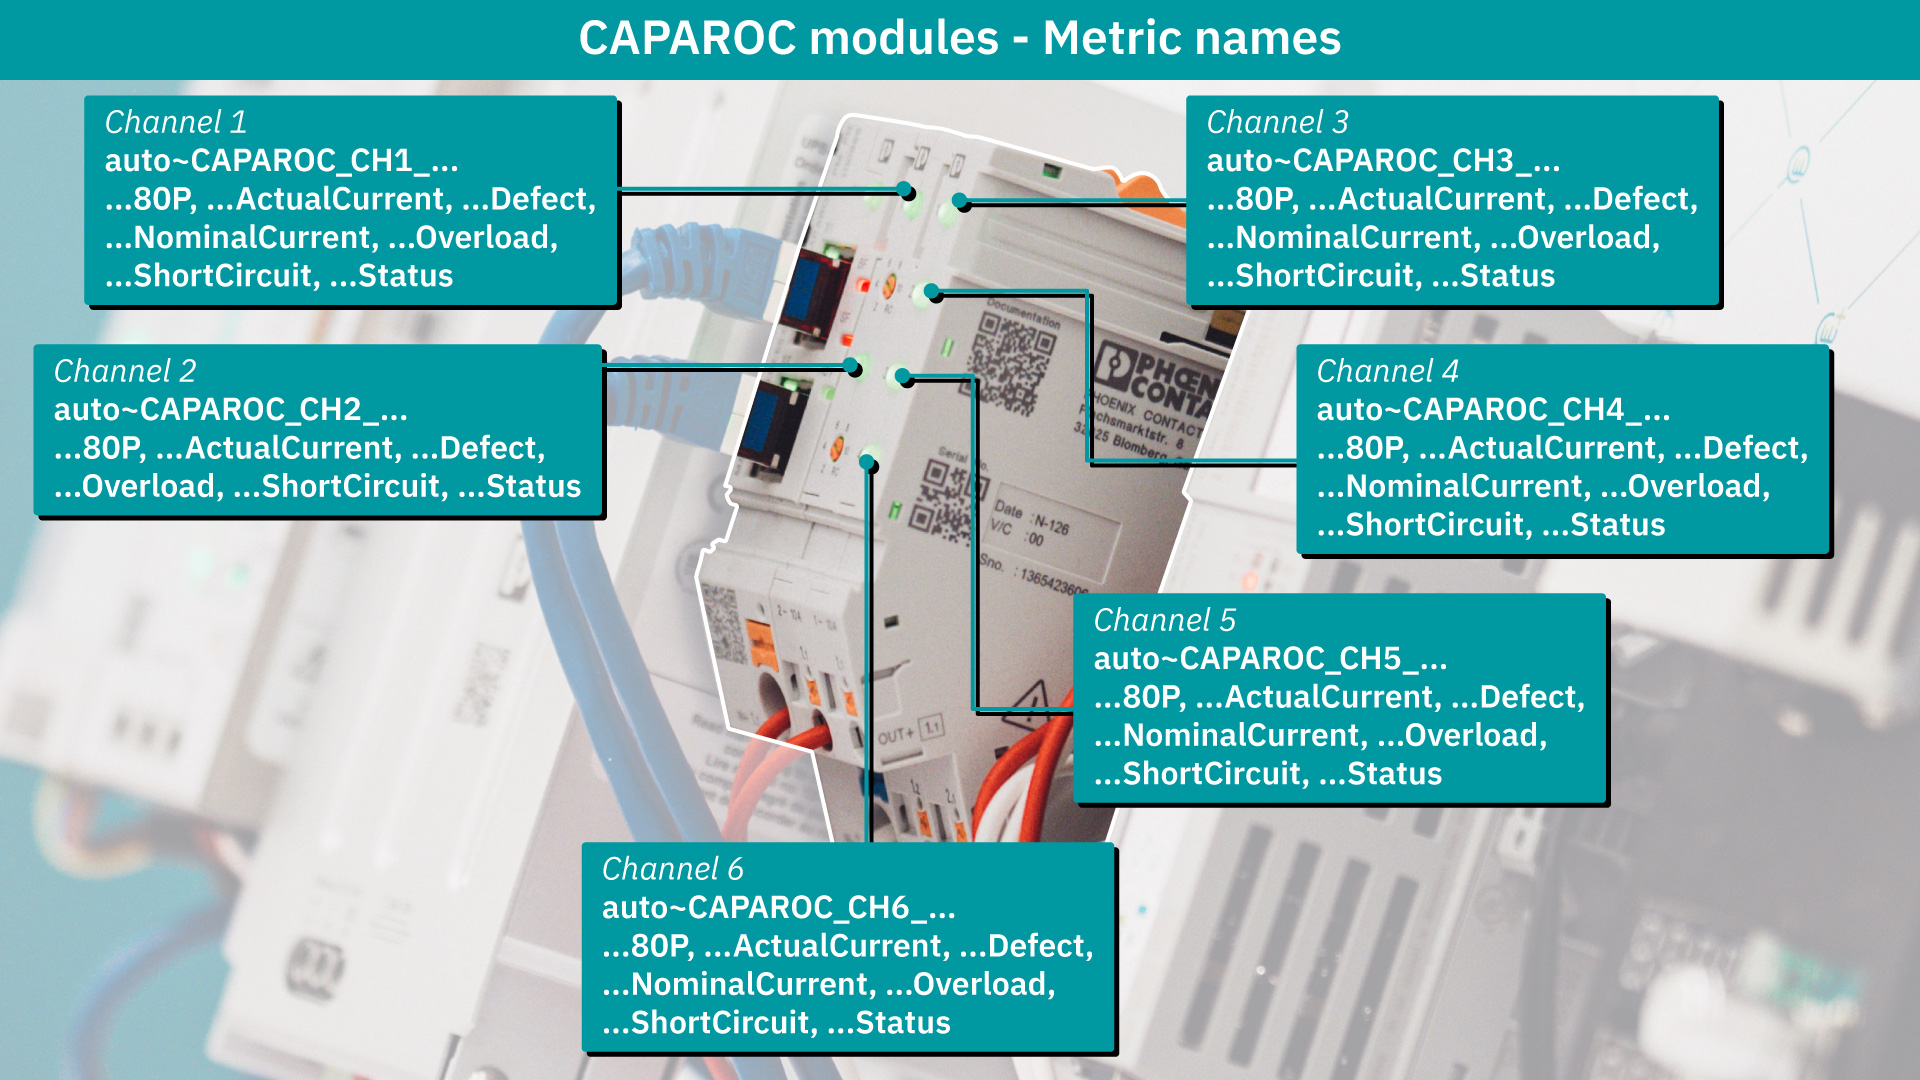 Naming scheme for CAPAROC module metrics